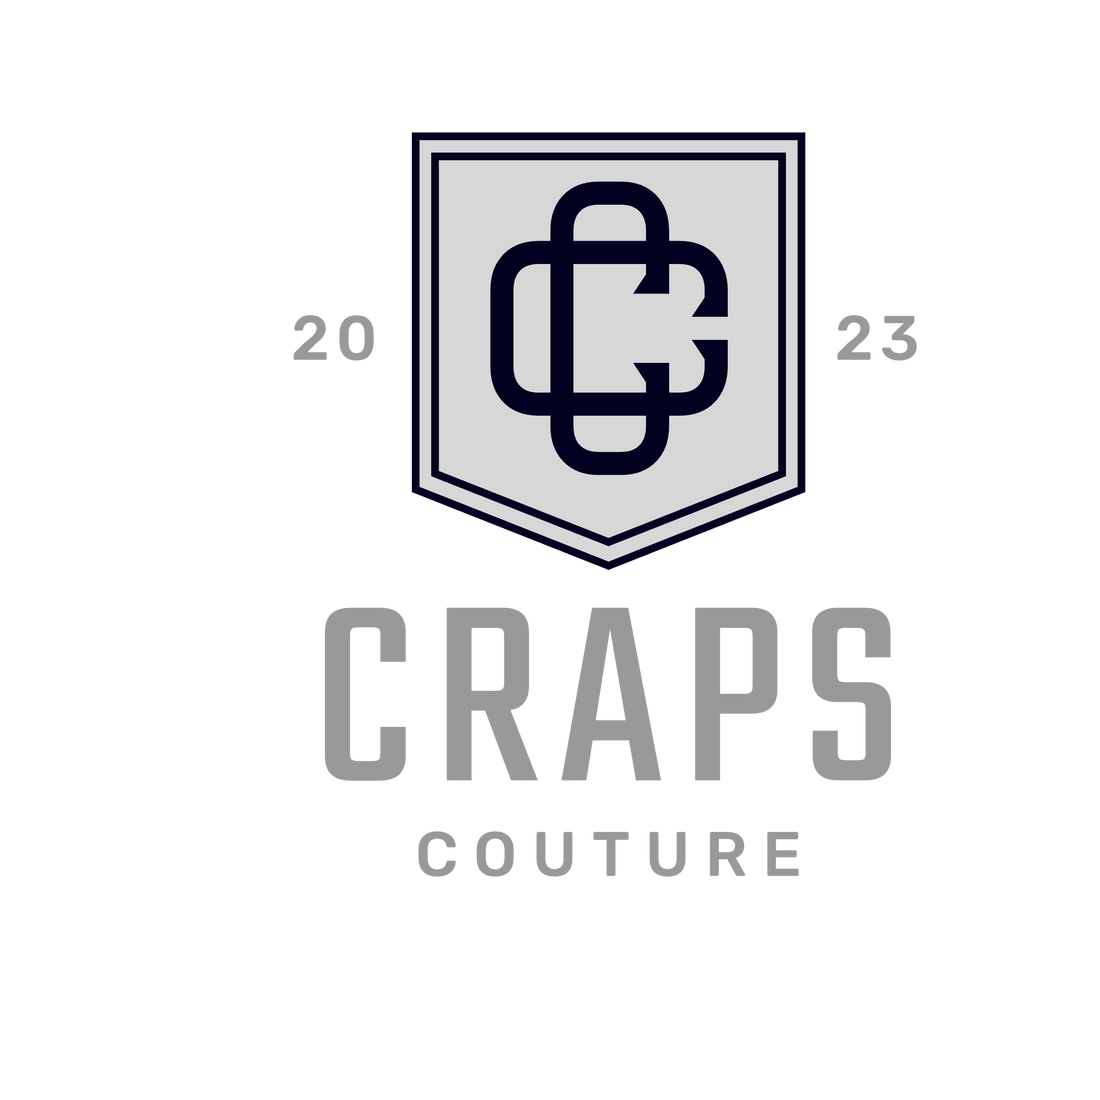 How we became Craps Couture -- Craps T-shirt designer